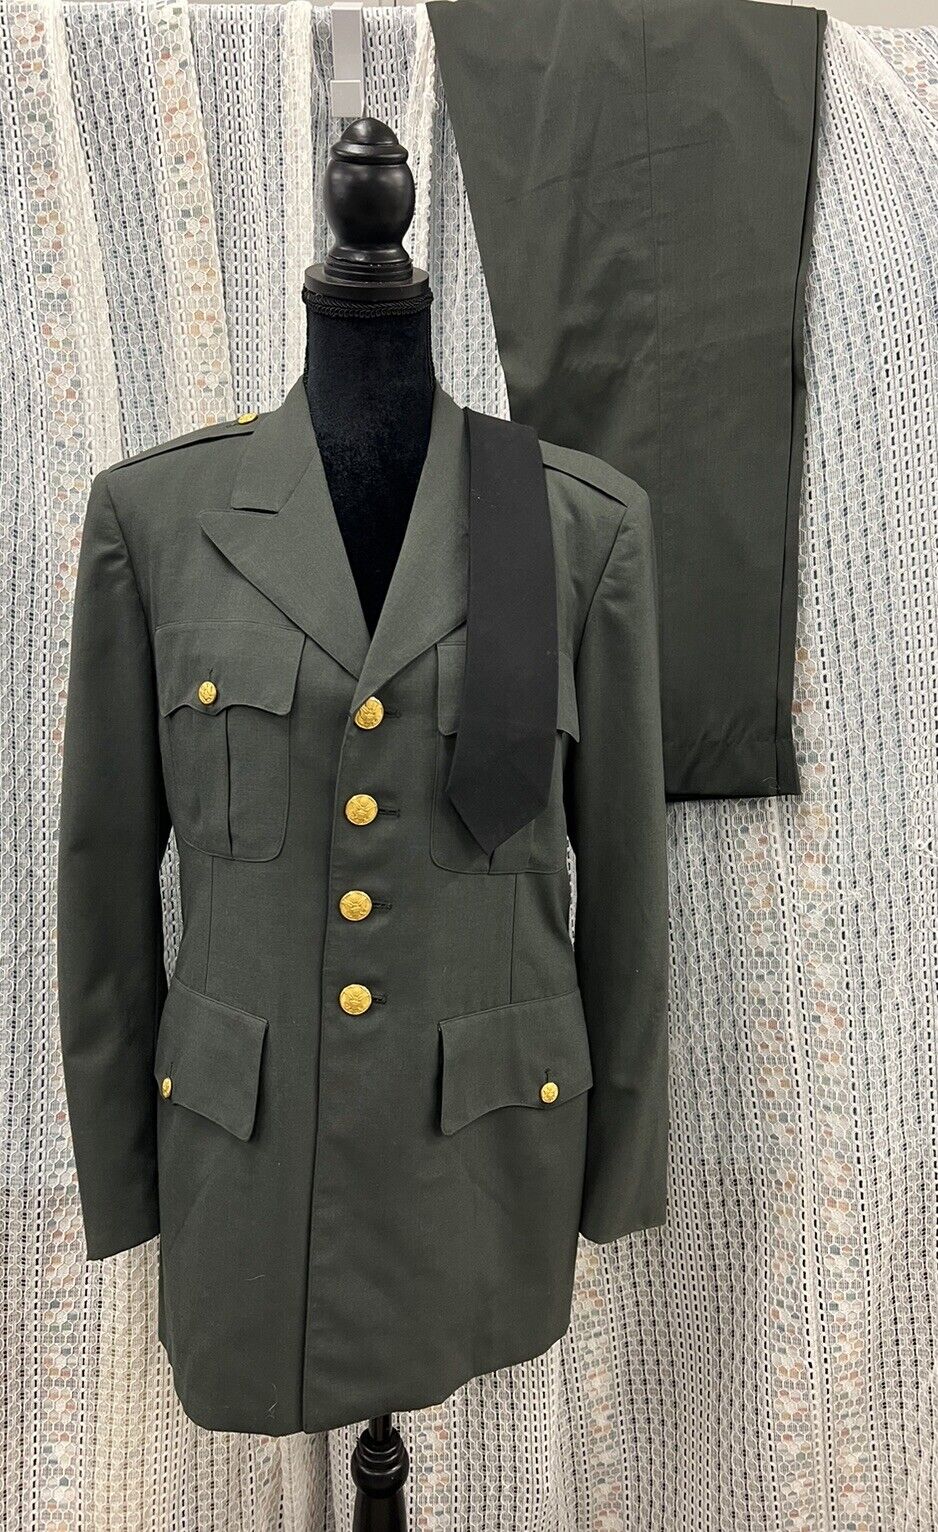 US Army VIETNAM ERA Officer Green Dress Uniform Jacket Pants Tie Wool Blend 38